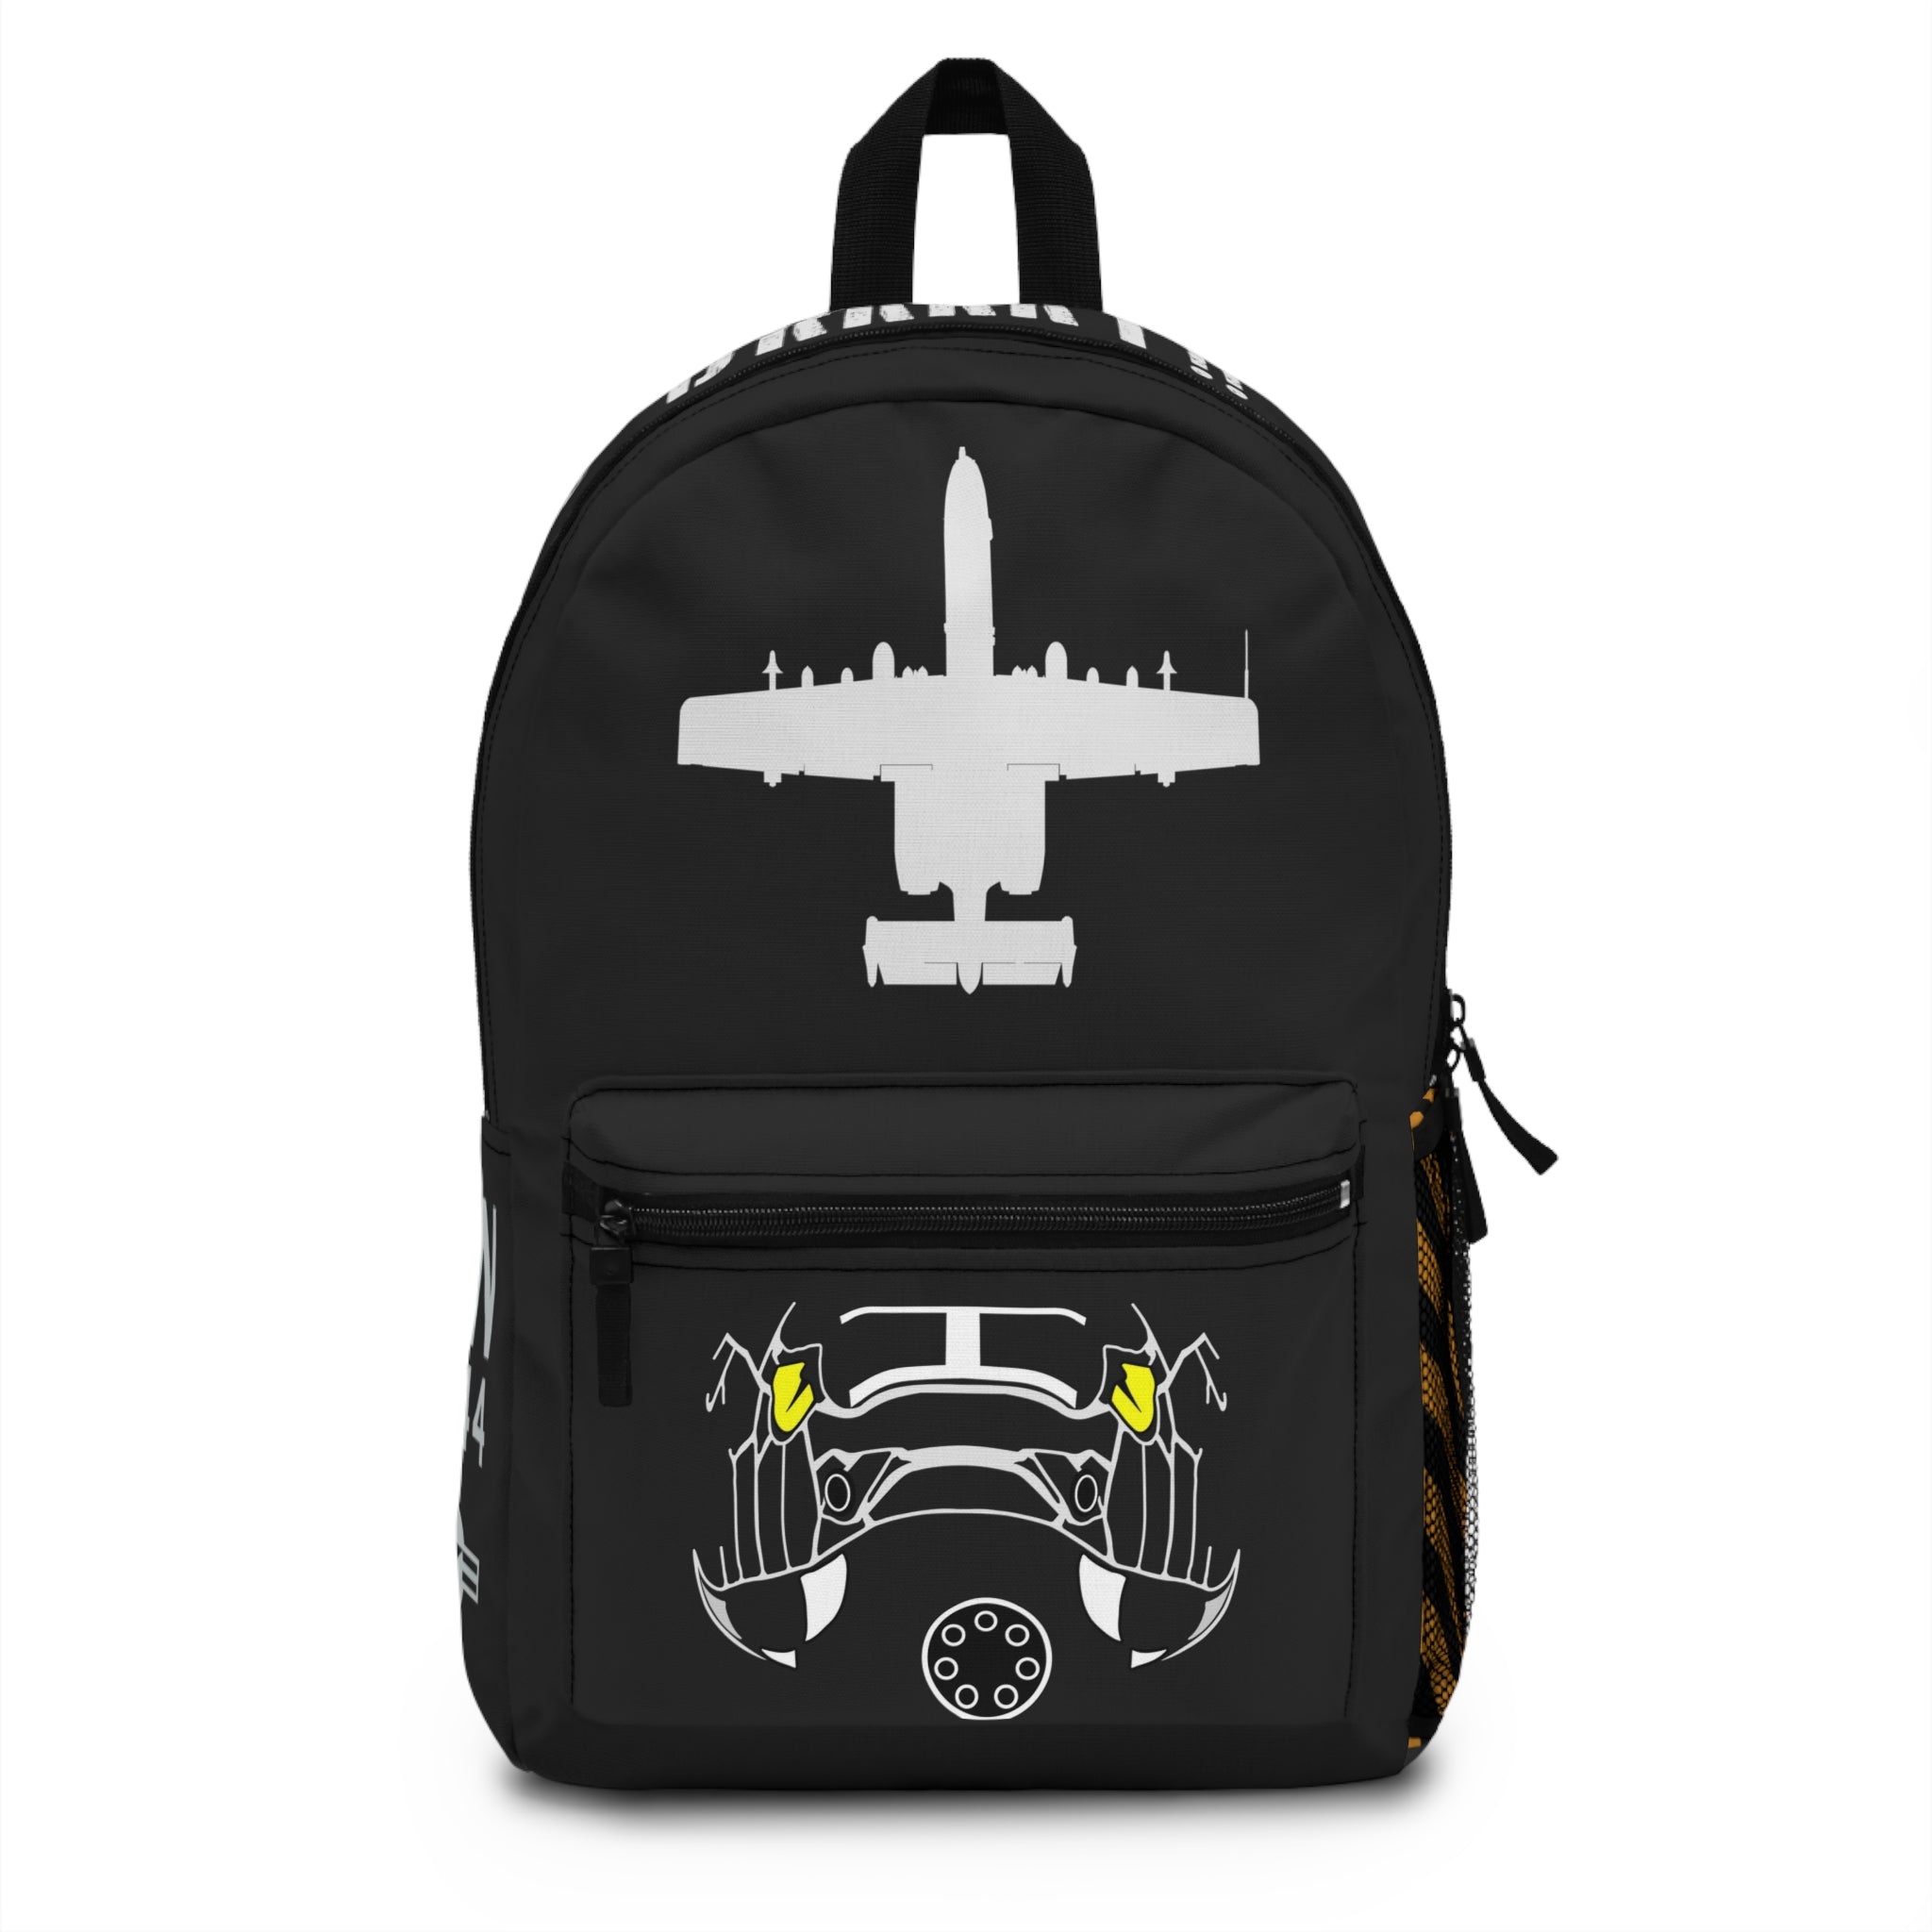 A-10 "Blacksnakes" Backpack - I Love a Hangar